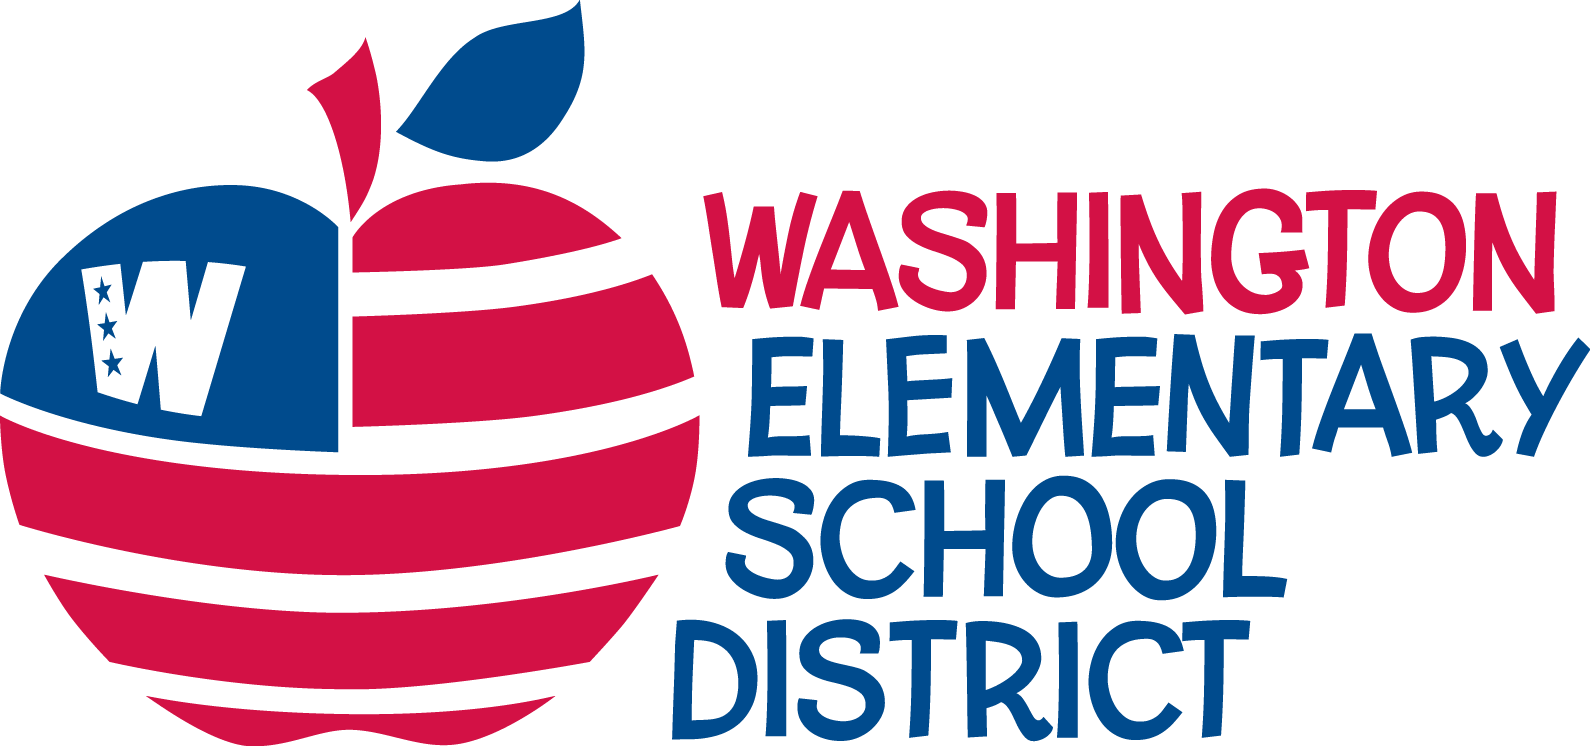 Wesd Homepage - Washington Elementary School District (1590x746)